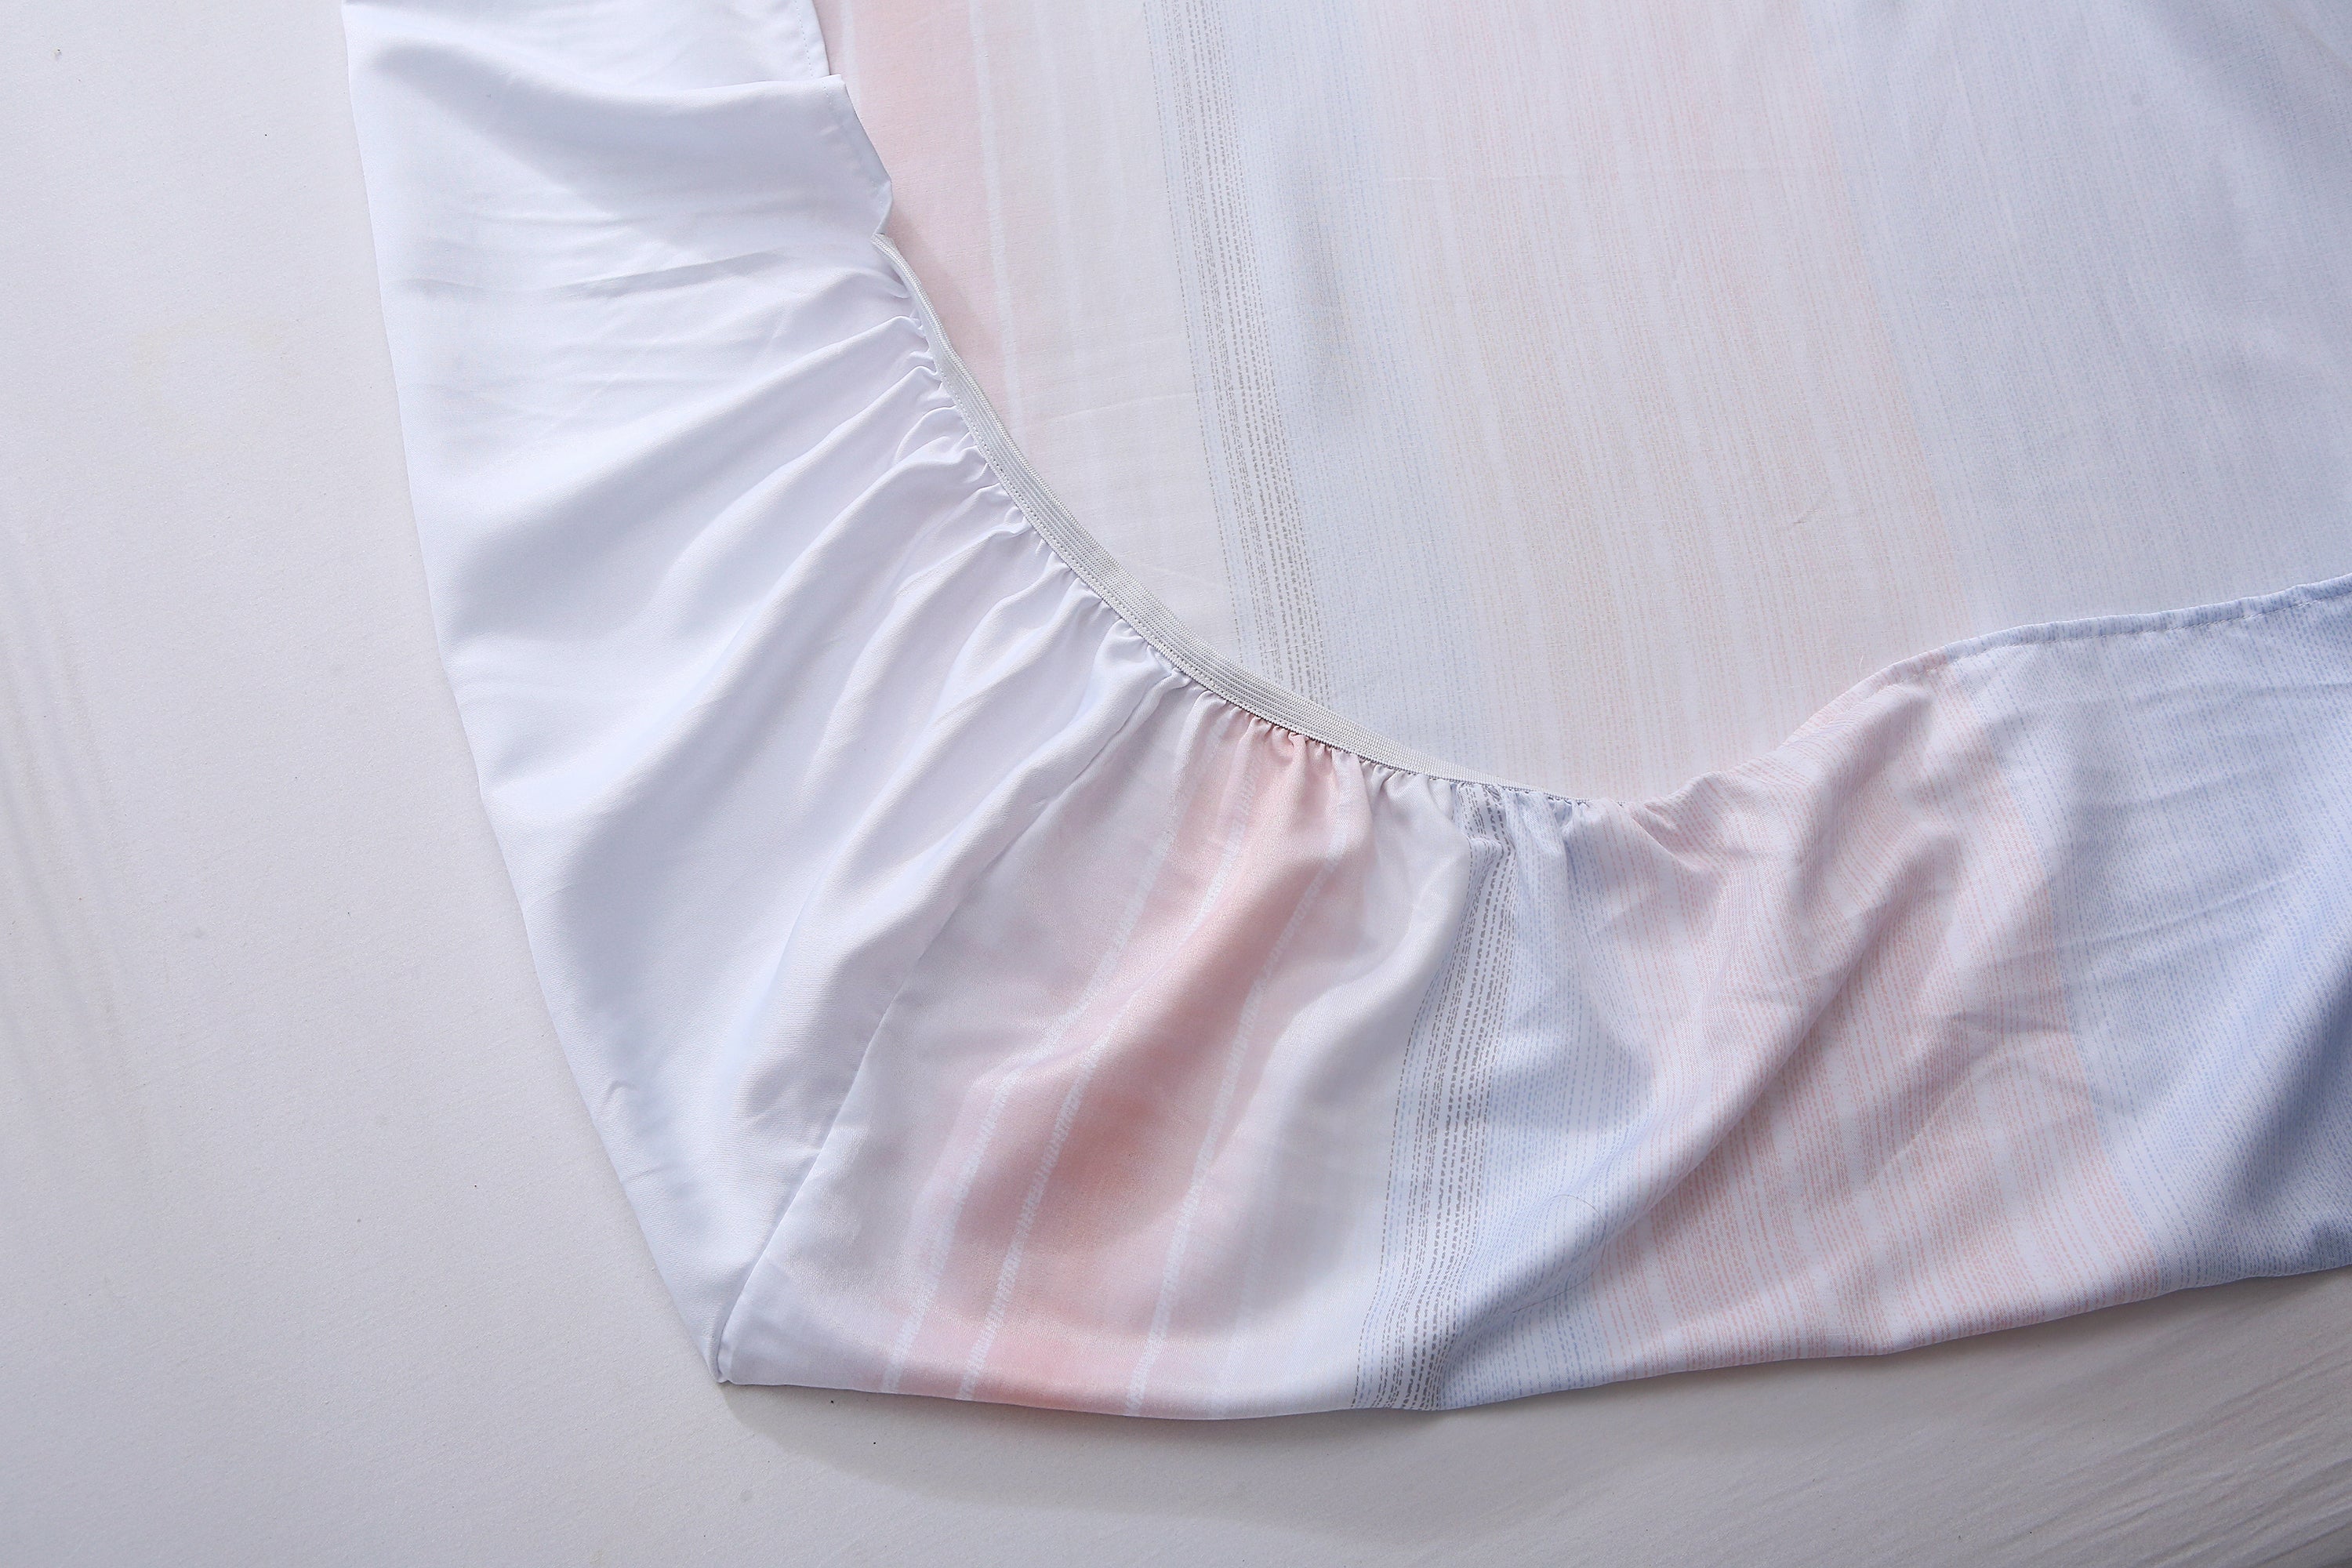 Simple Ol' Me TENCEL Bed Linen - 2100針天絲床單套裝- T05